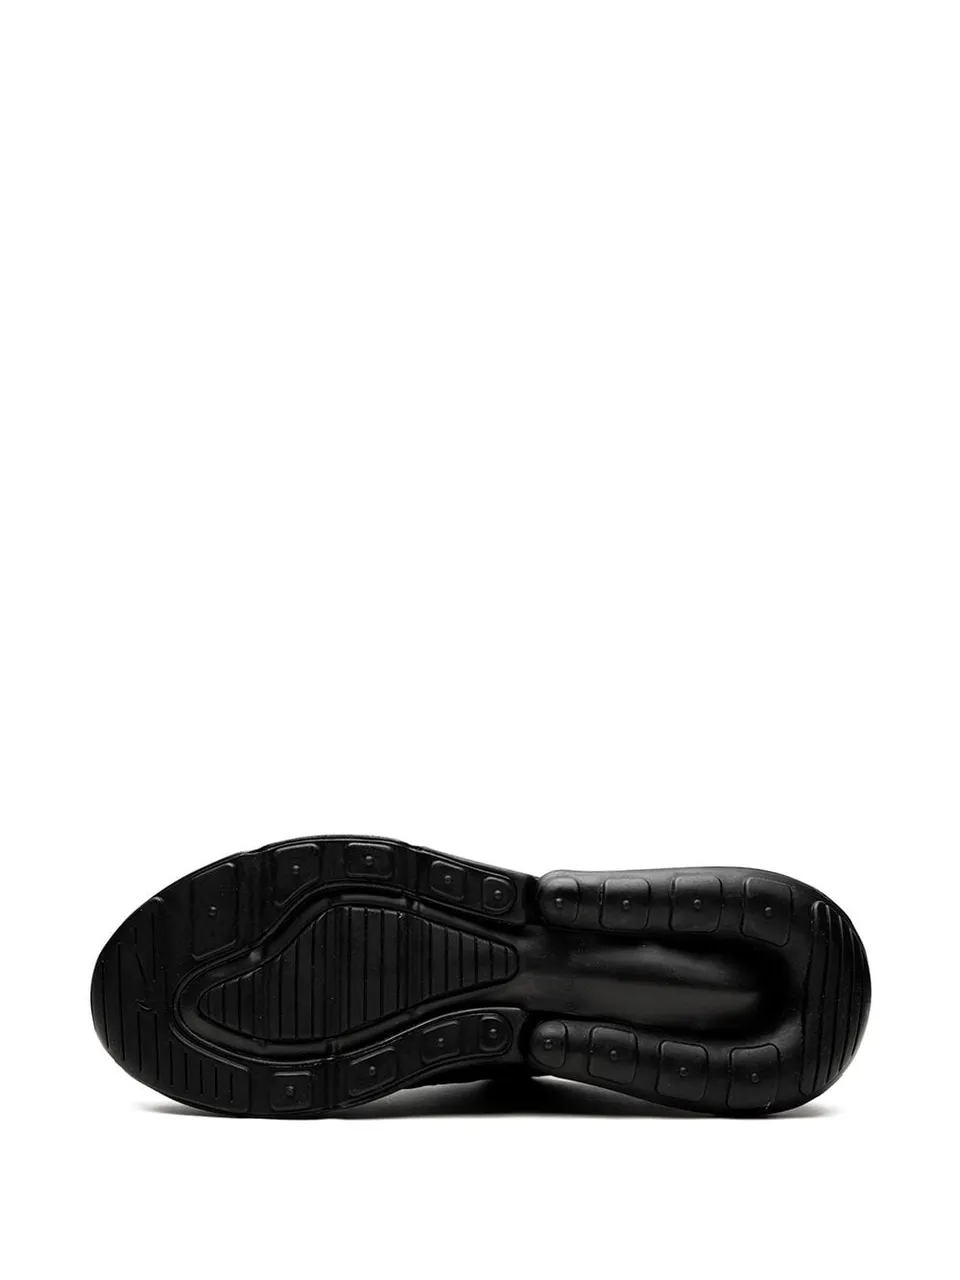 Nike Kids Air Max 270 sneakers - Black